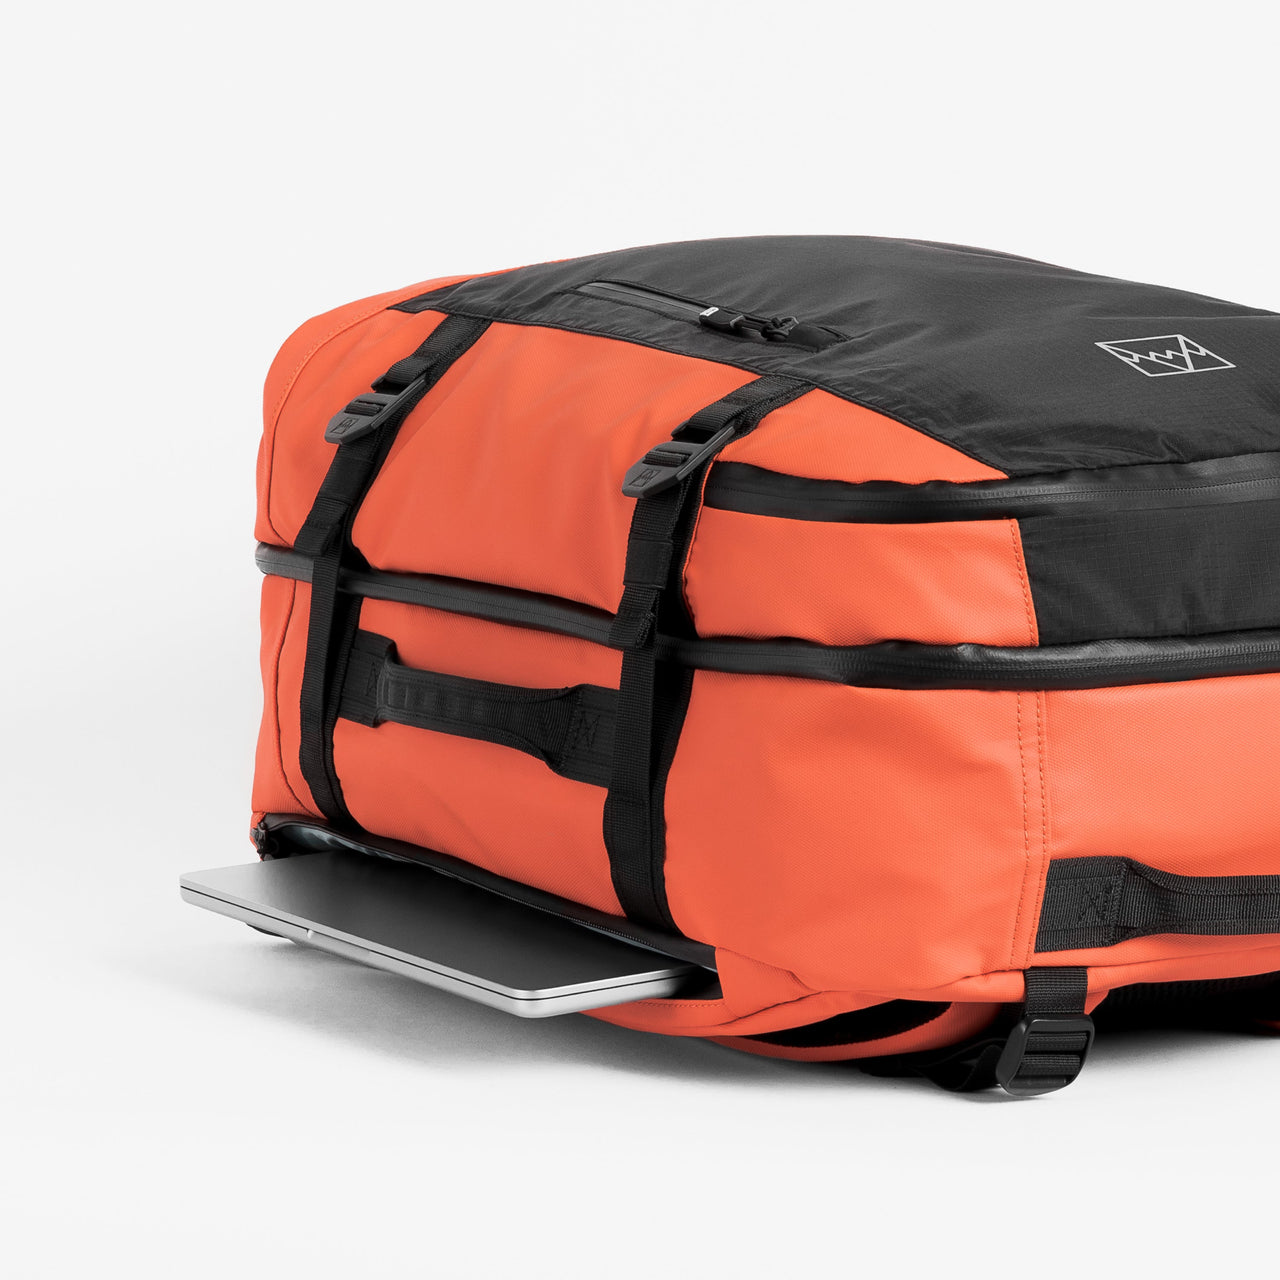 Adventure Bag in Ember Orange top view with laptop pocket open